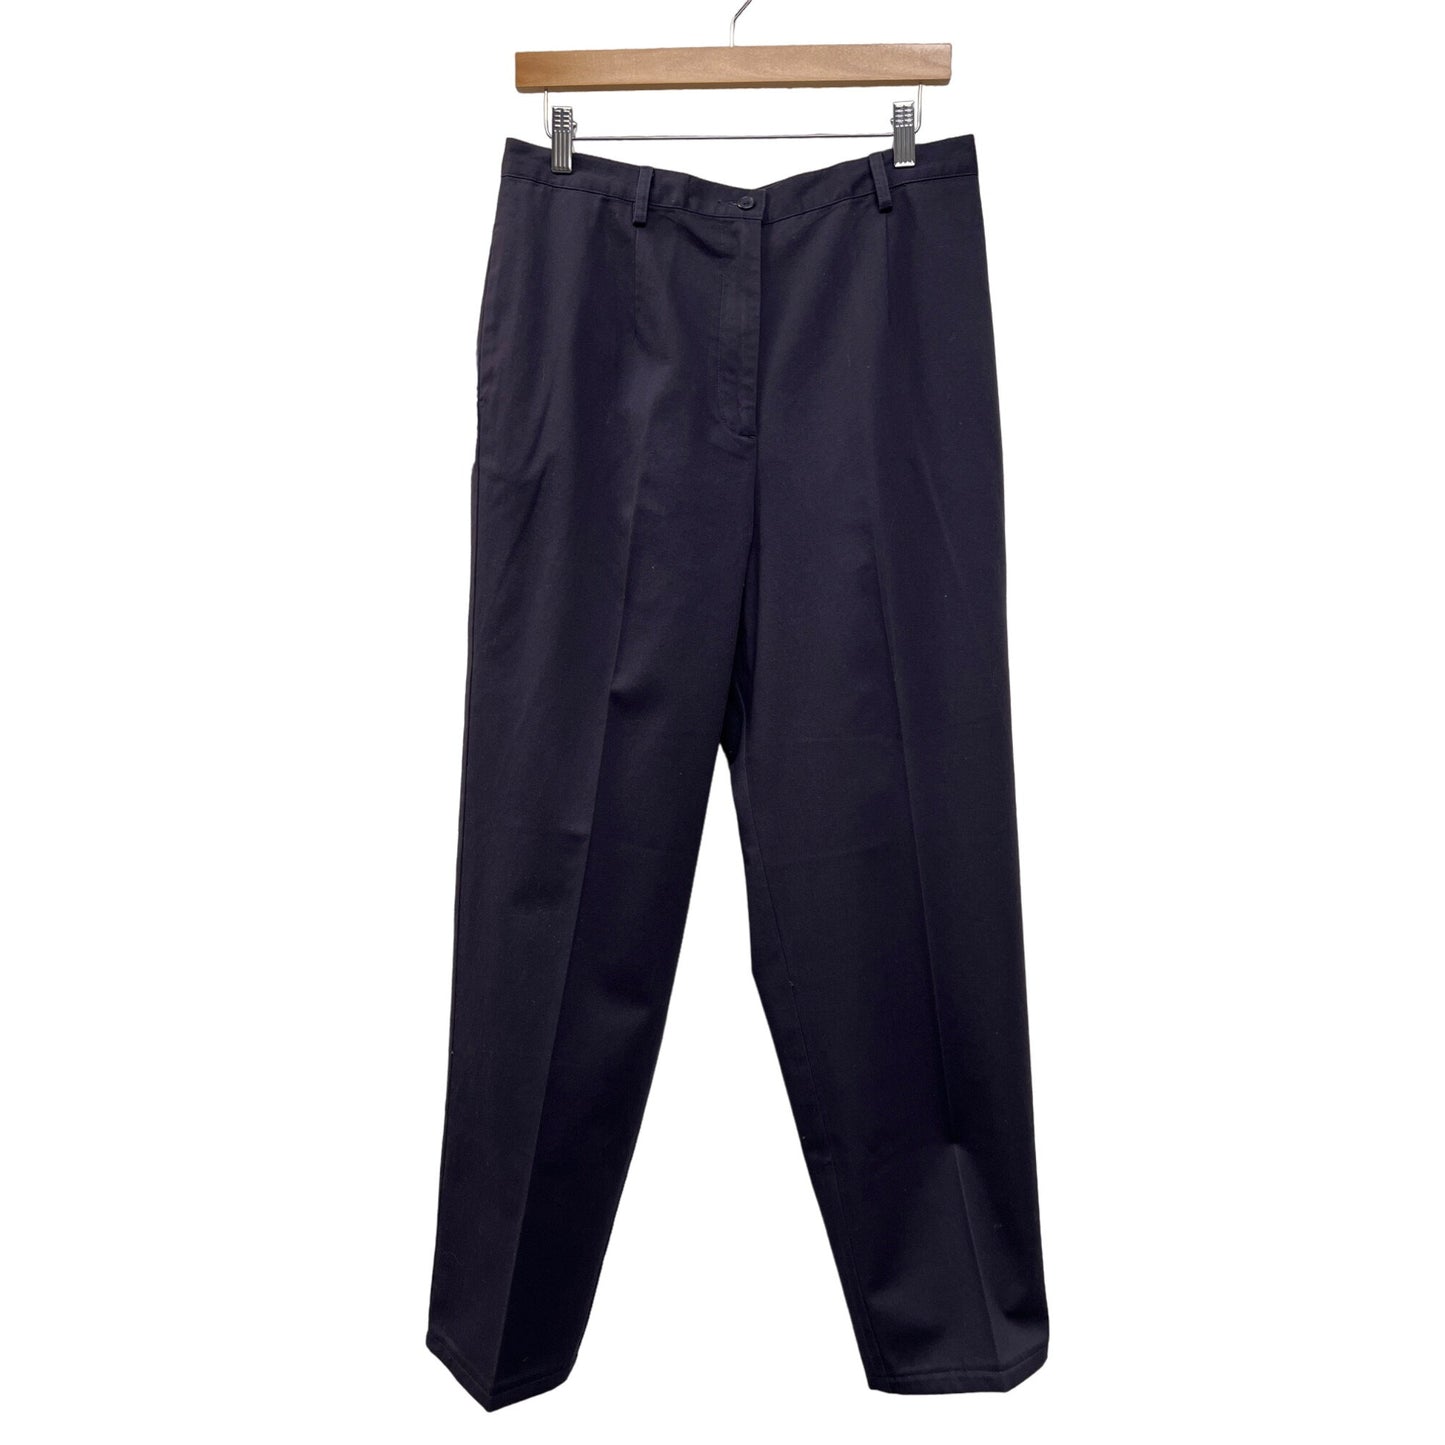 Pendleton Navy Blue Cotton Chino Pants